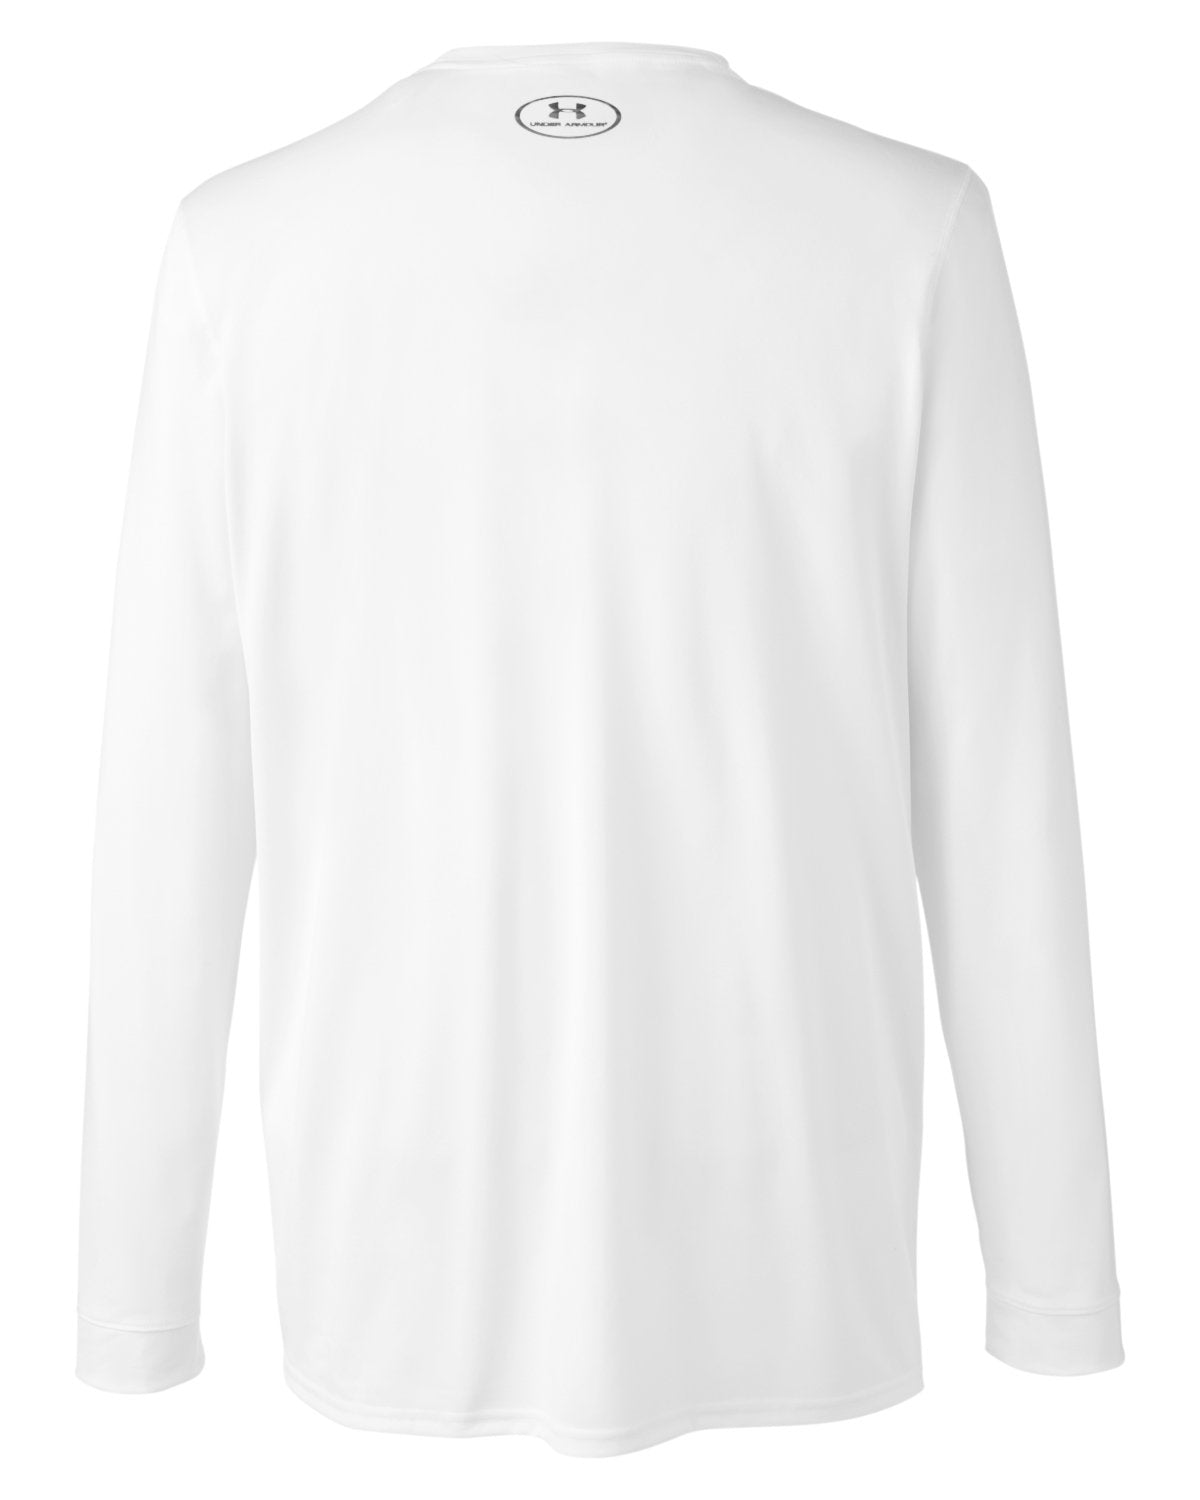 CSU Club Sports Under Armour Men's Long-Sleeve Locker Tee 2.0 - BT Imprintables Shirts